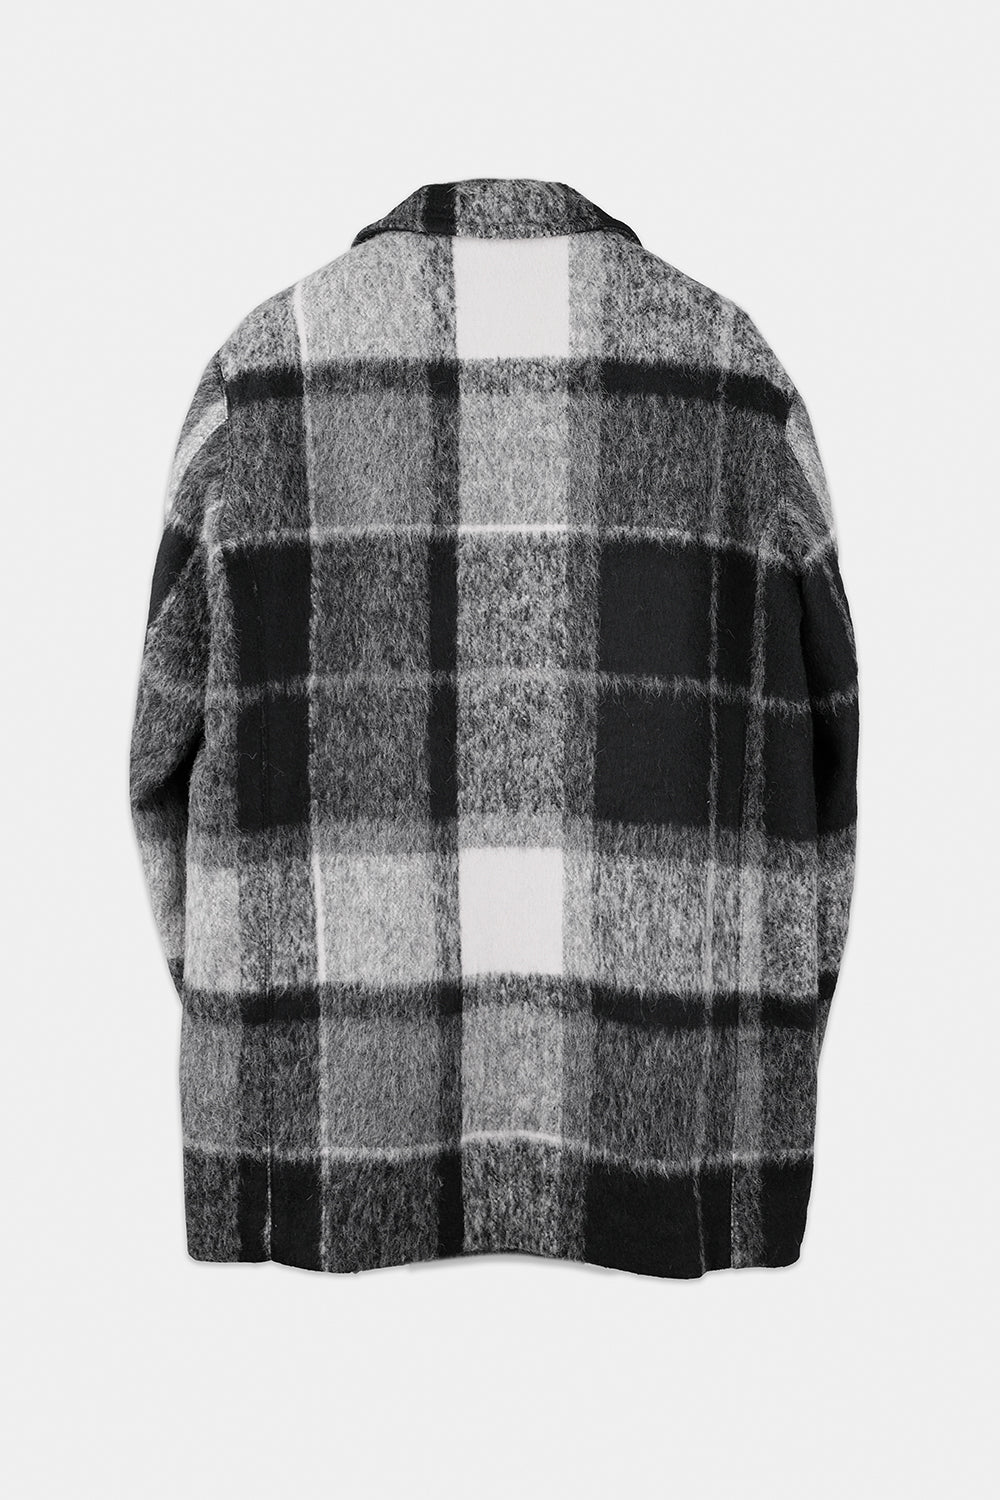 SEANNUNG - MEN - PLAID PATTERN STAND COLLAR WOOL COAT 格紋毛料騎士夾克